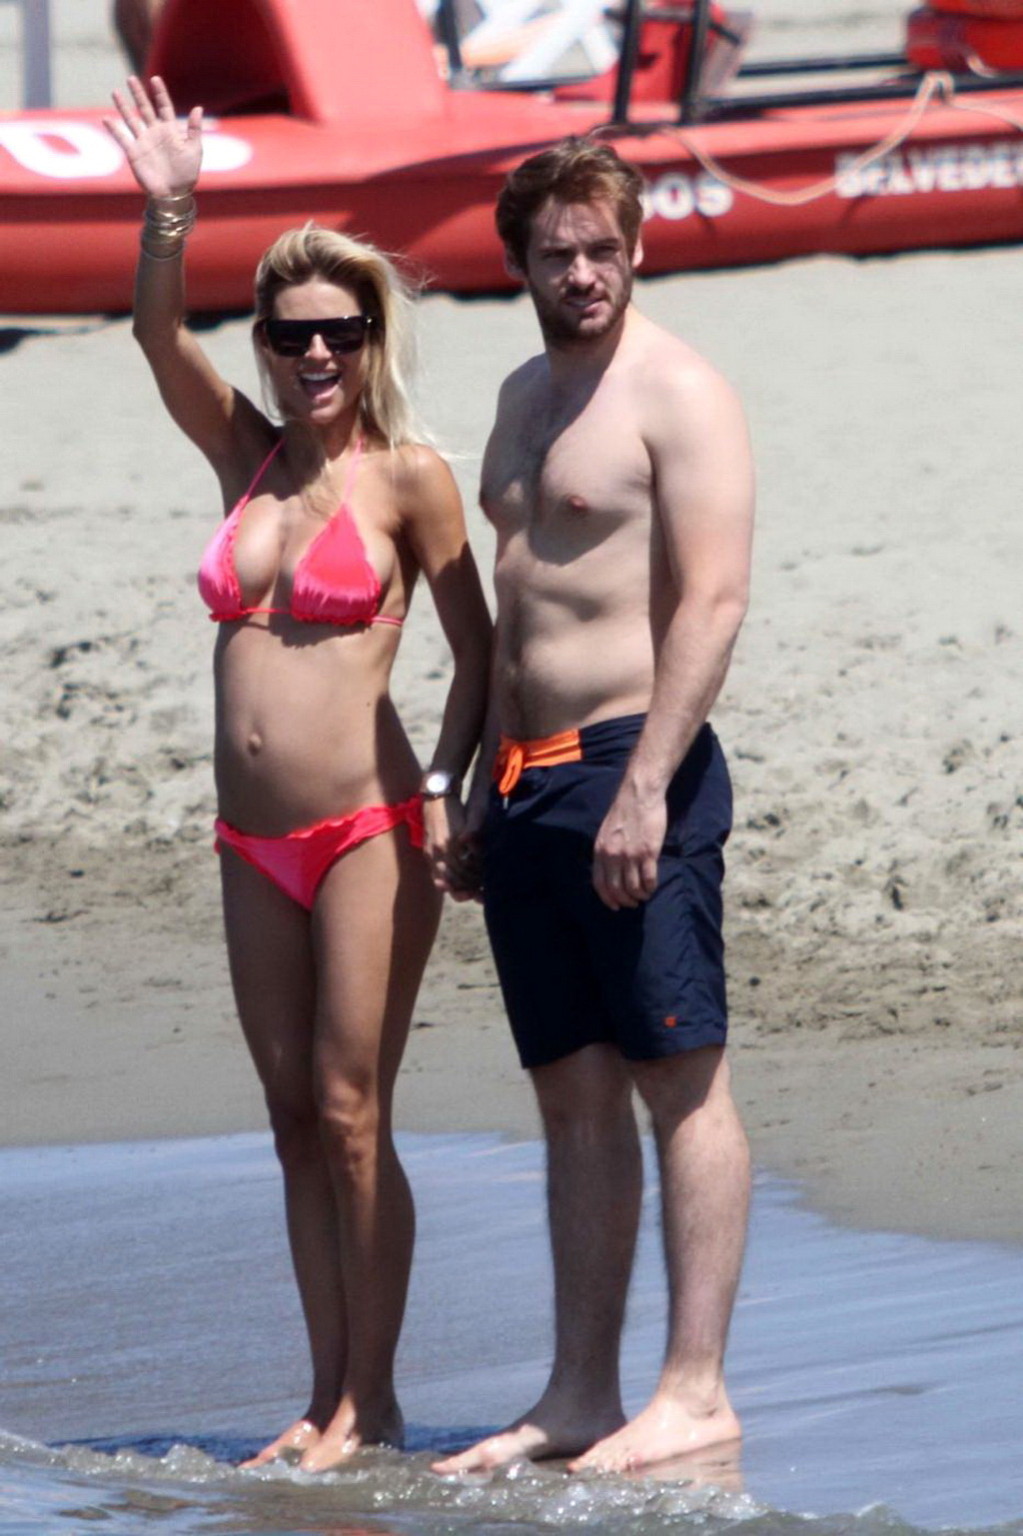 Michelle hunziker embarazada con un bikini en la playa de forte dei marmi, ita
 #75227840